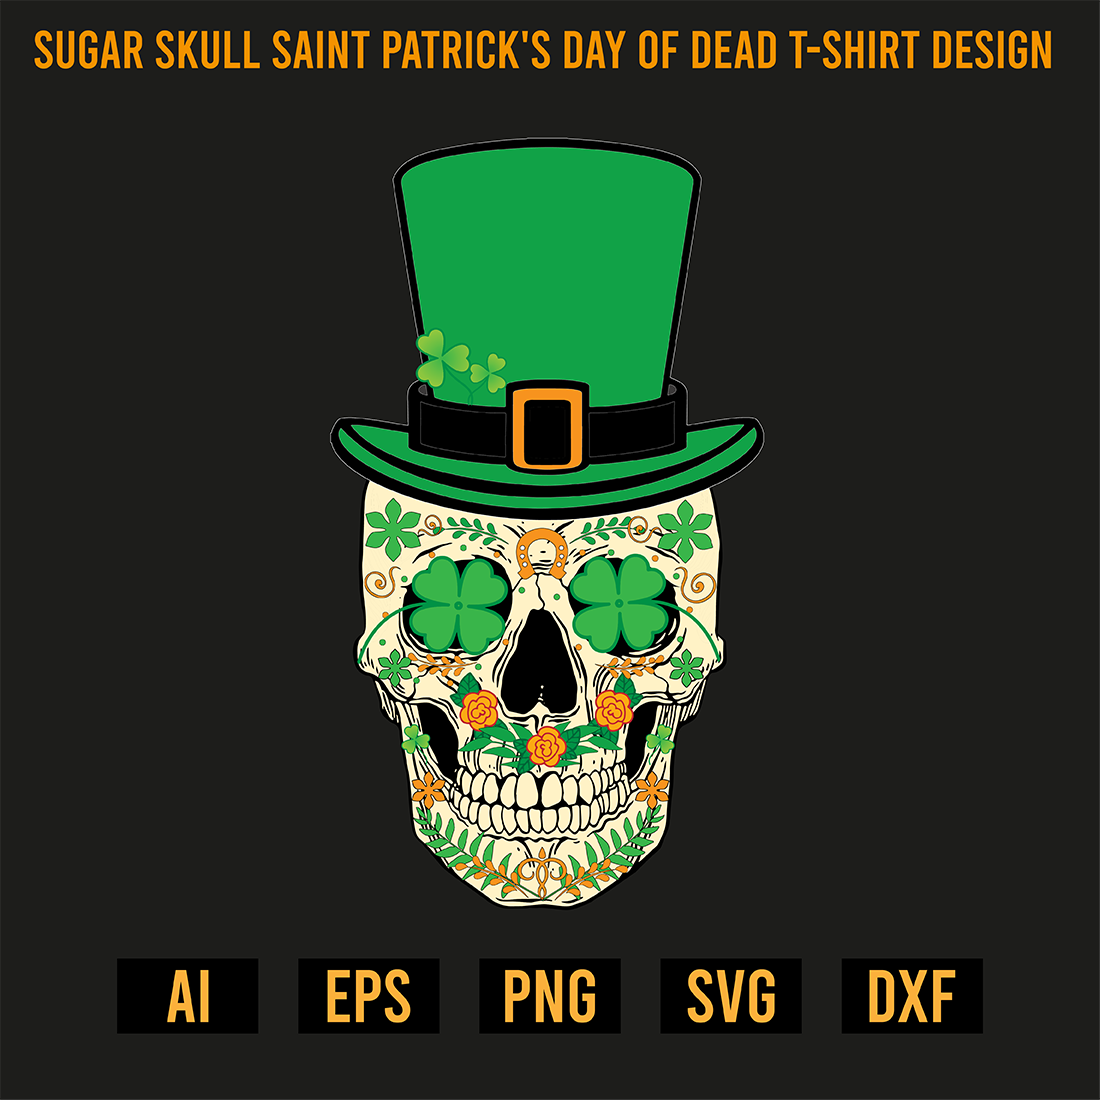 Sugar Skull Saint Patrick's Day of Dead T-Shirt Design preview image.